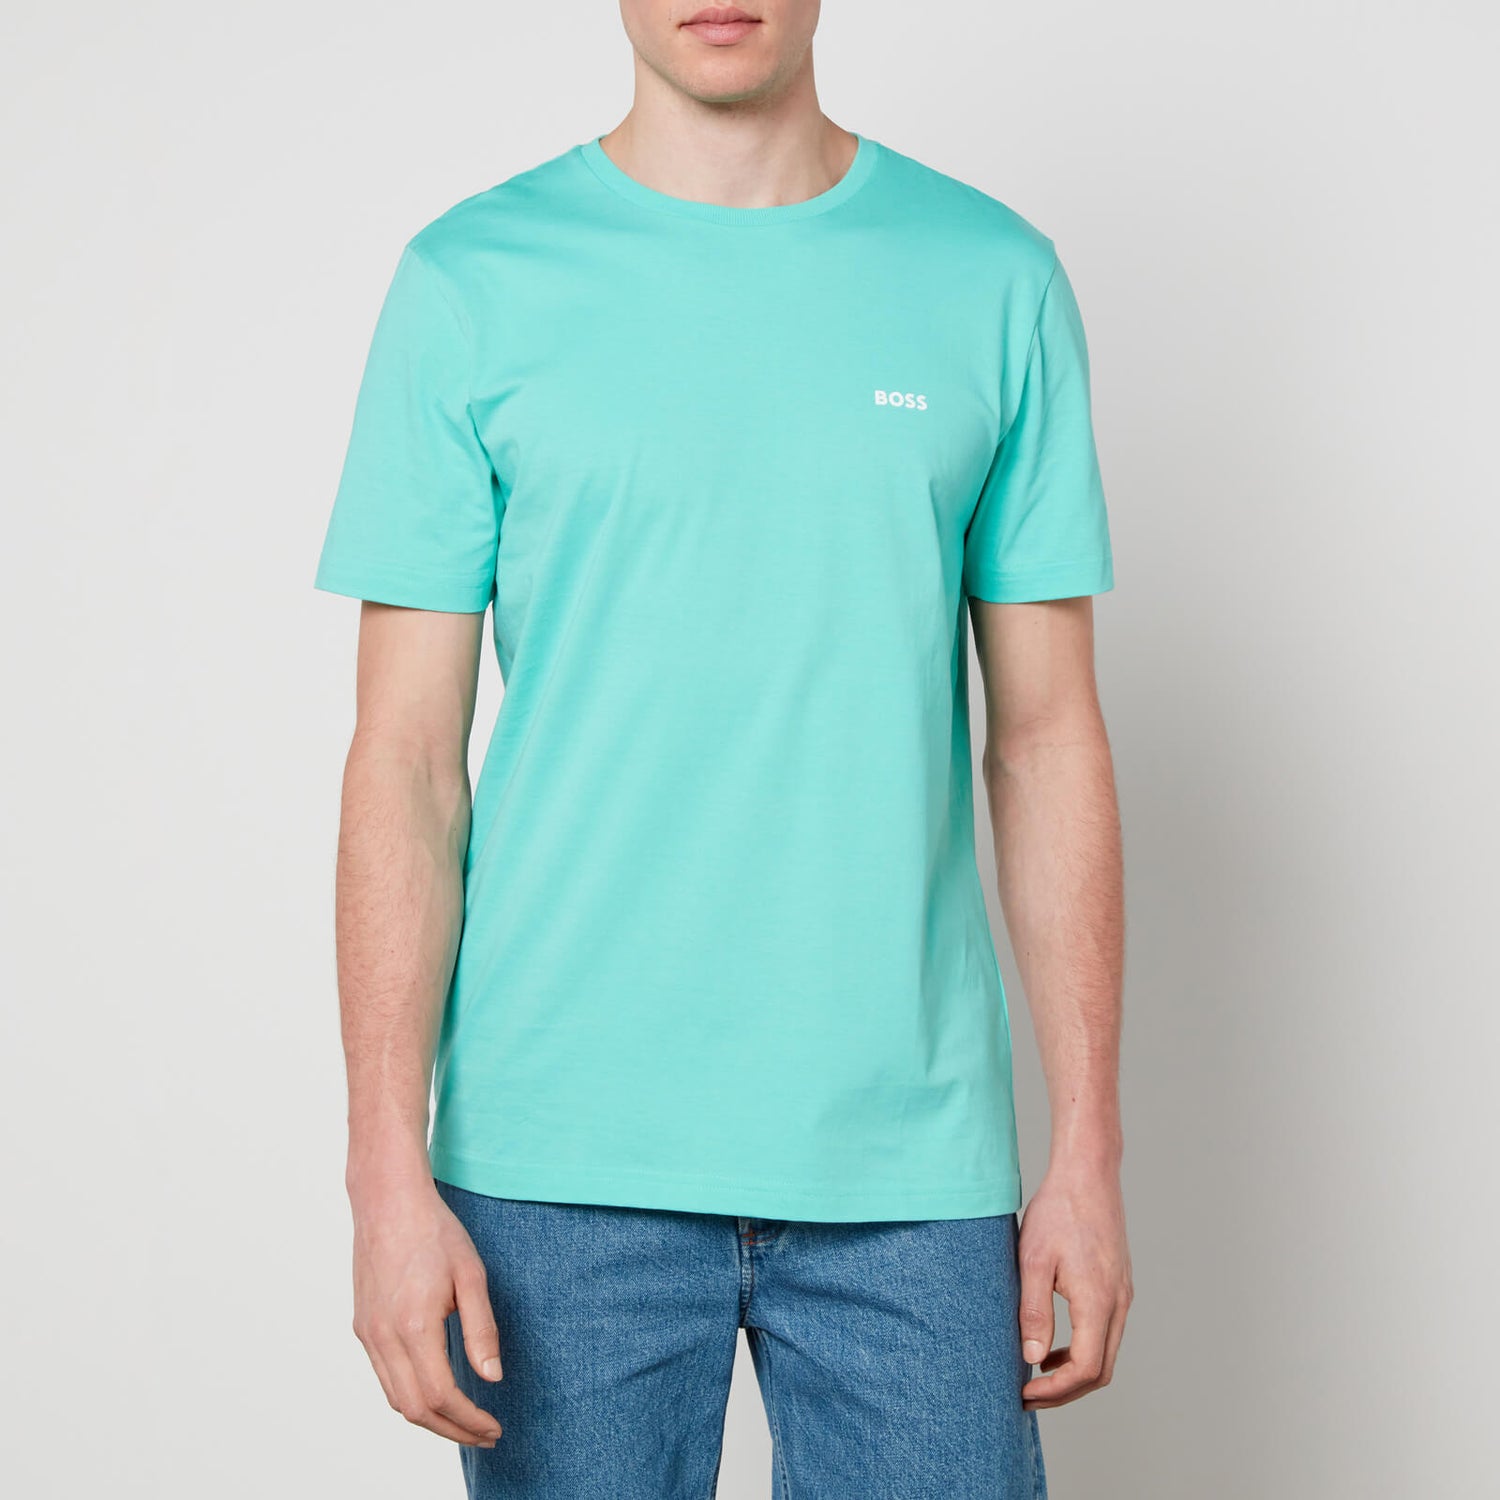 BOSS Tee 7 Cotton-Jersey Graphic T-Shirt - M